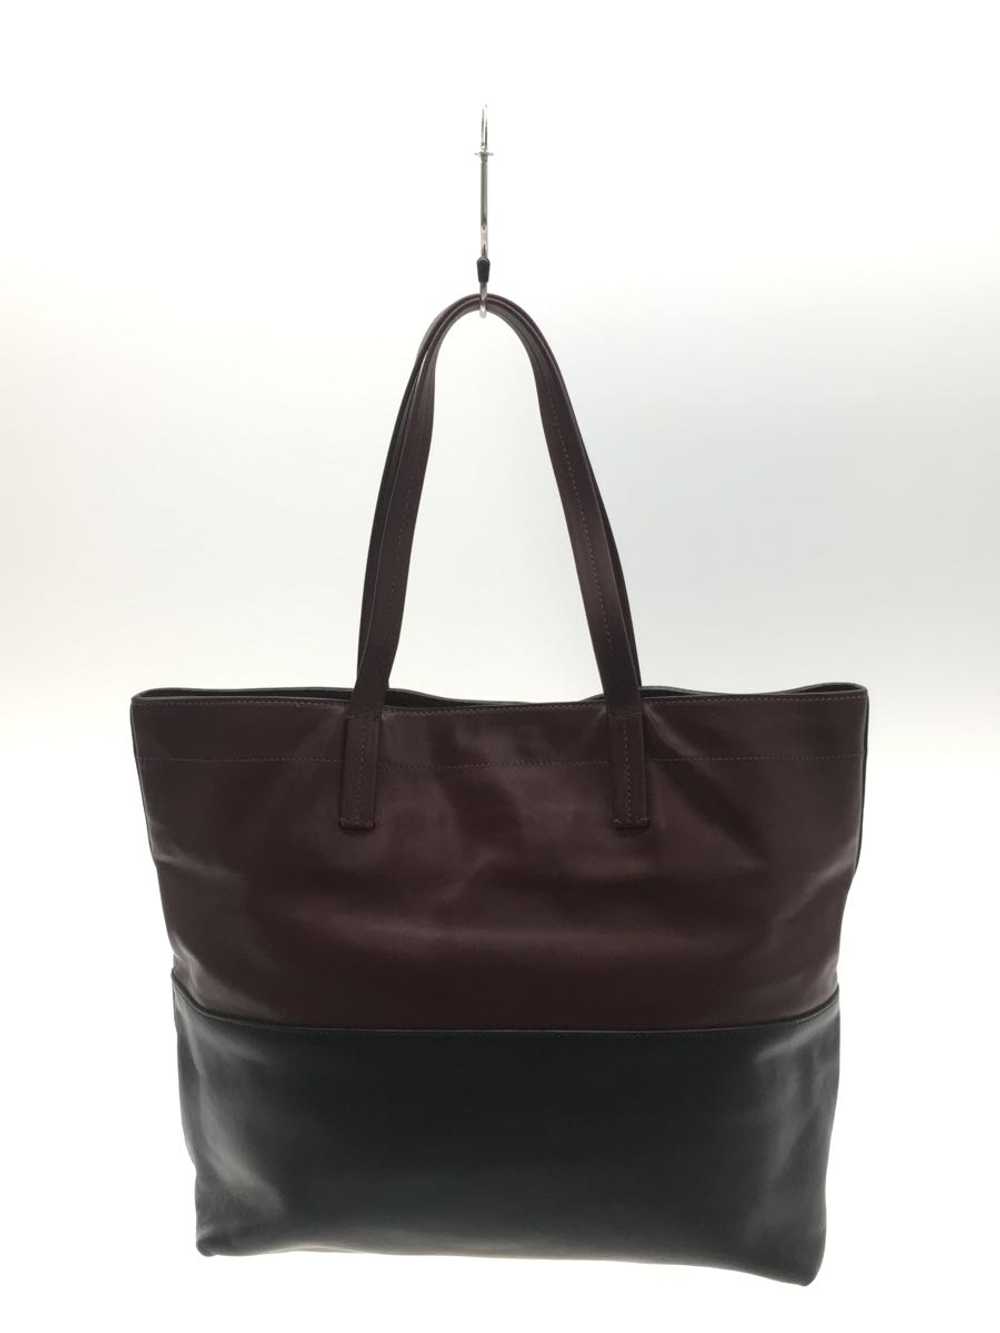 MIUMIU Tote Bag/Leather/Red Bag - image 4